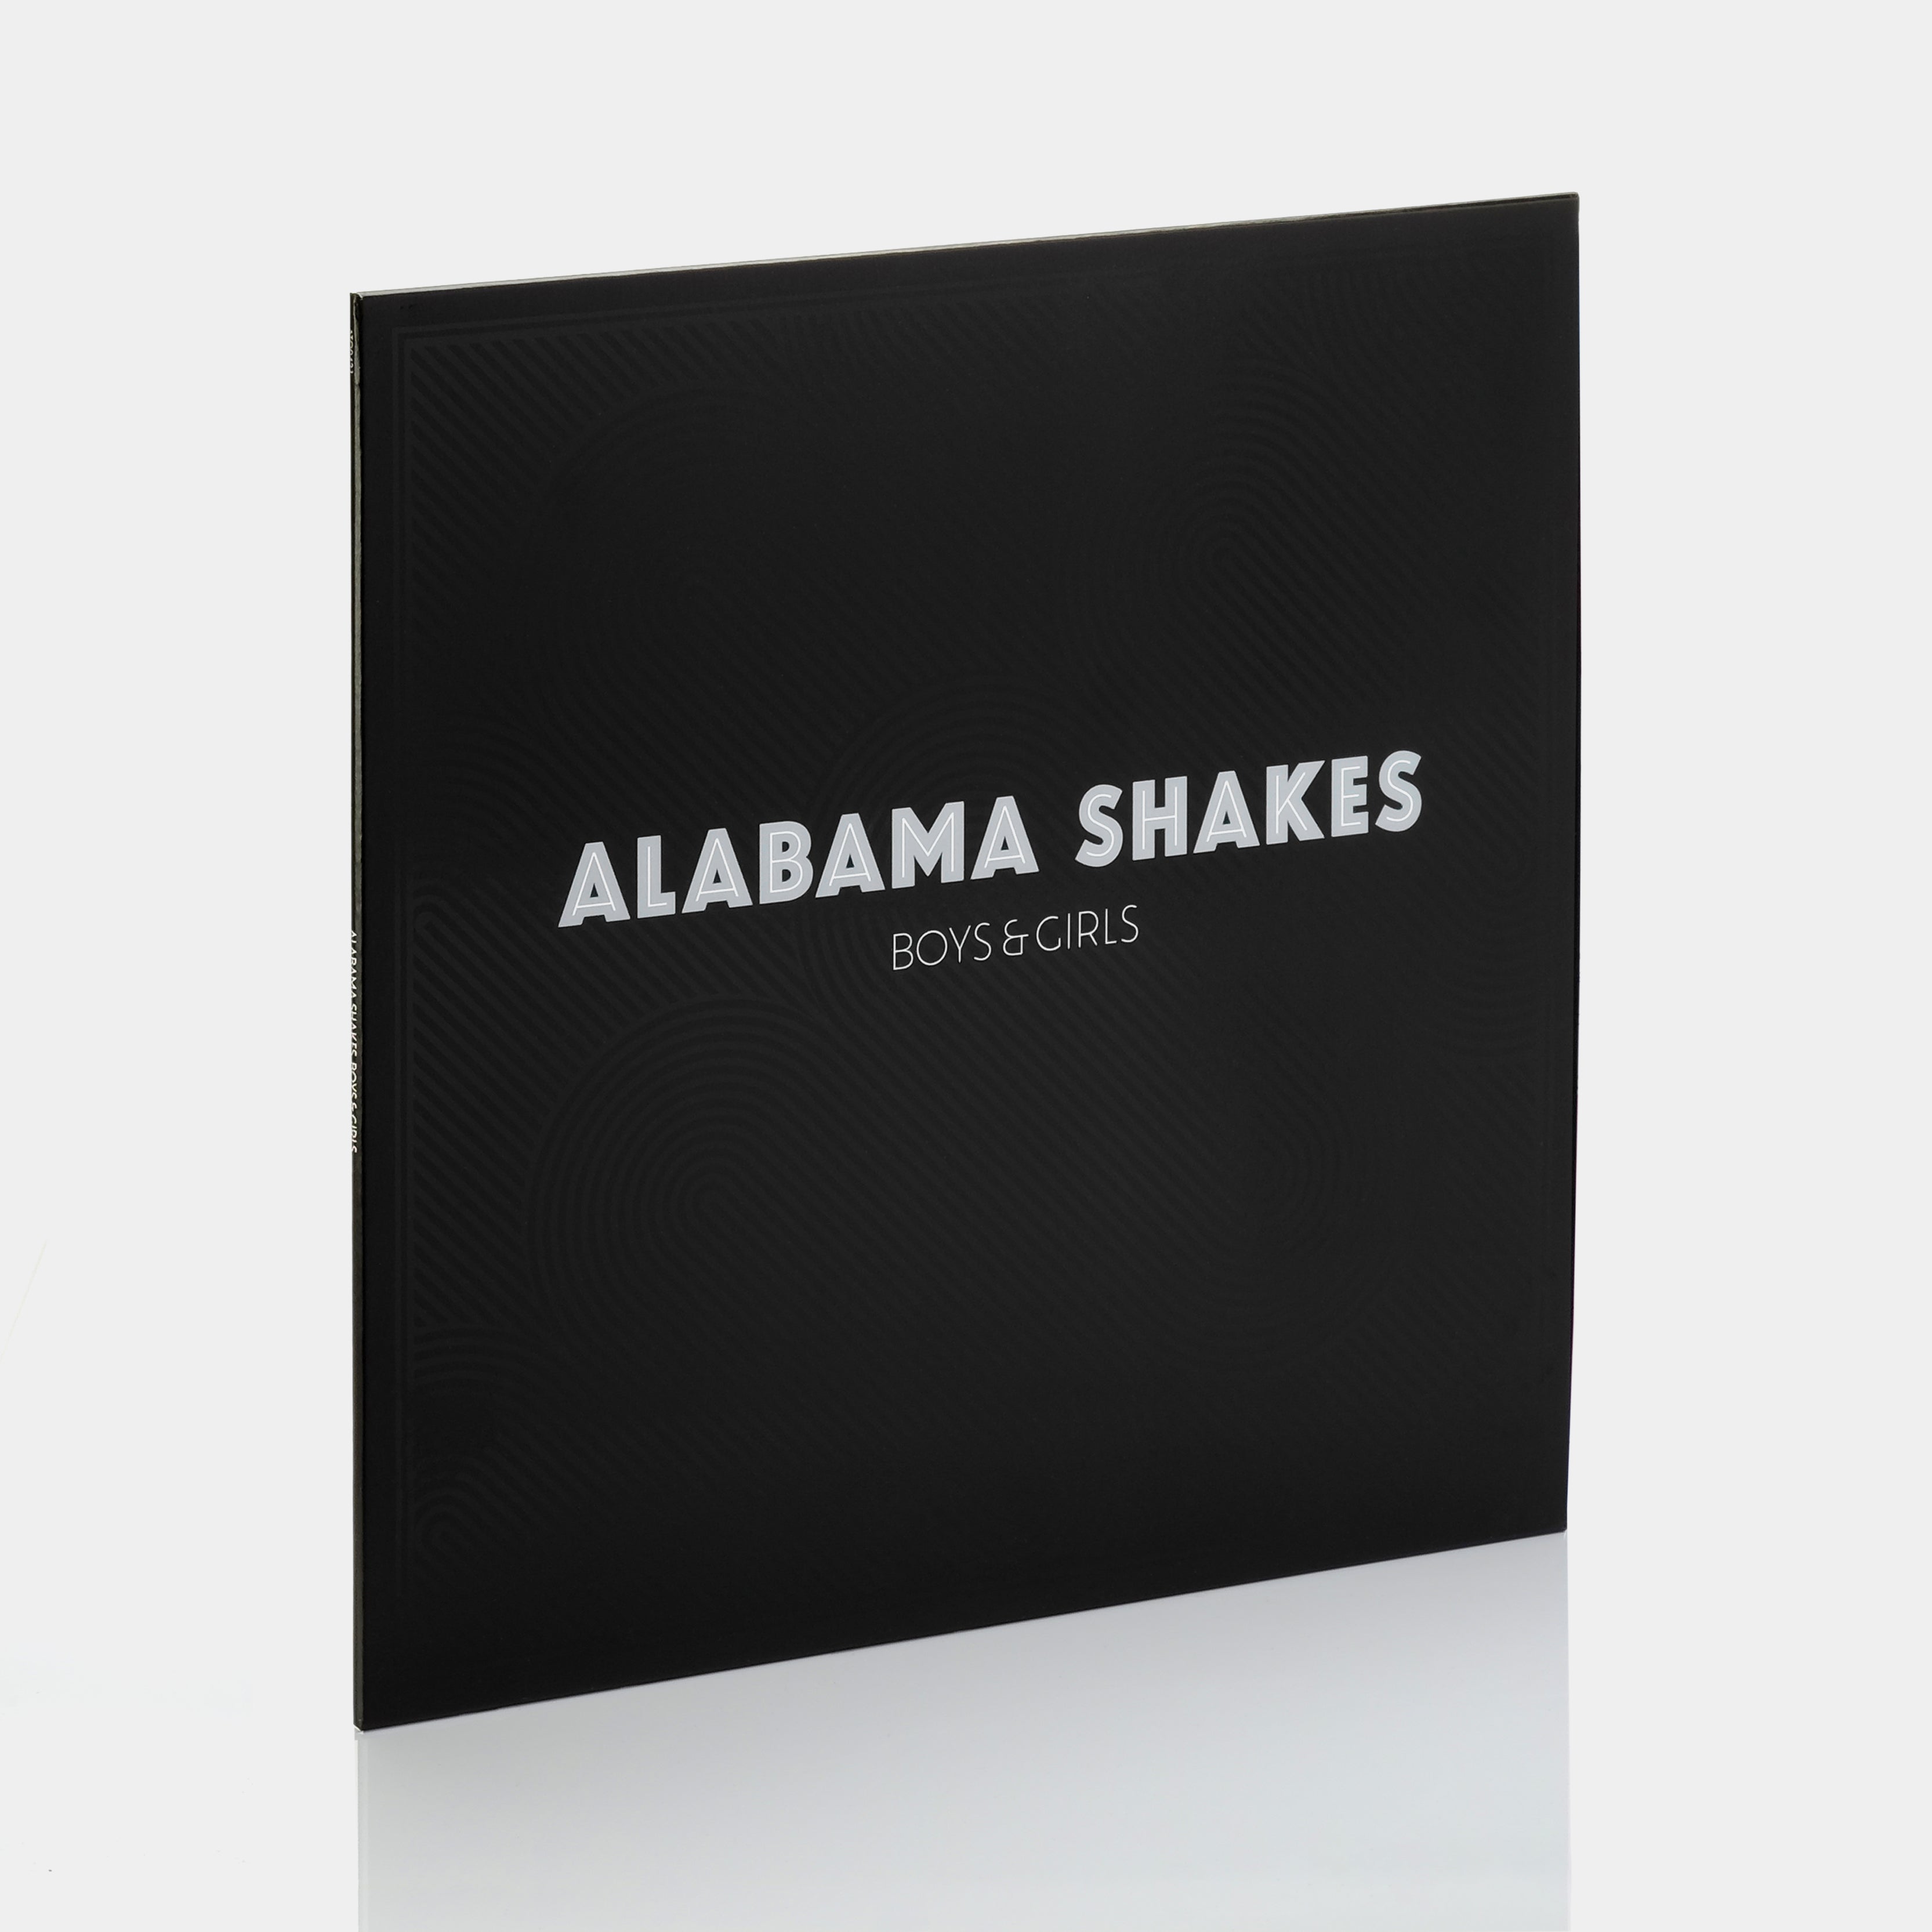 Alabama Shakes - Boys & Girls Limited Edition LP Pastel Pink & Purple Vinyl Record